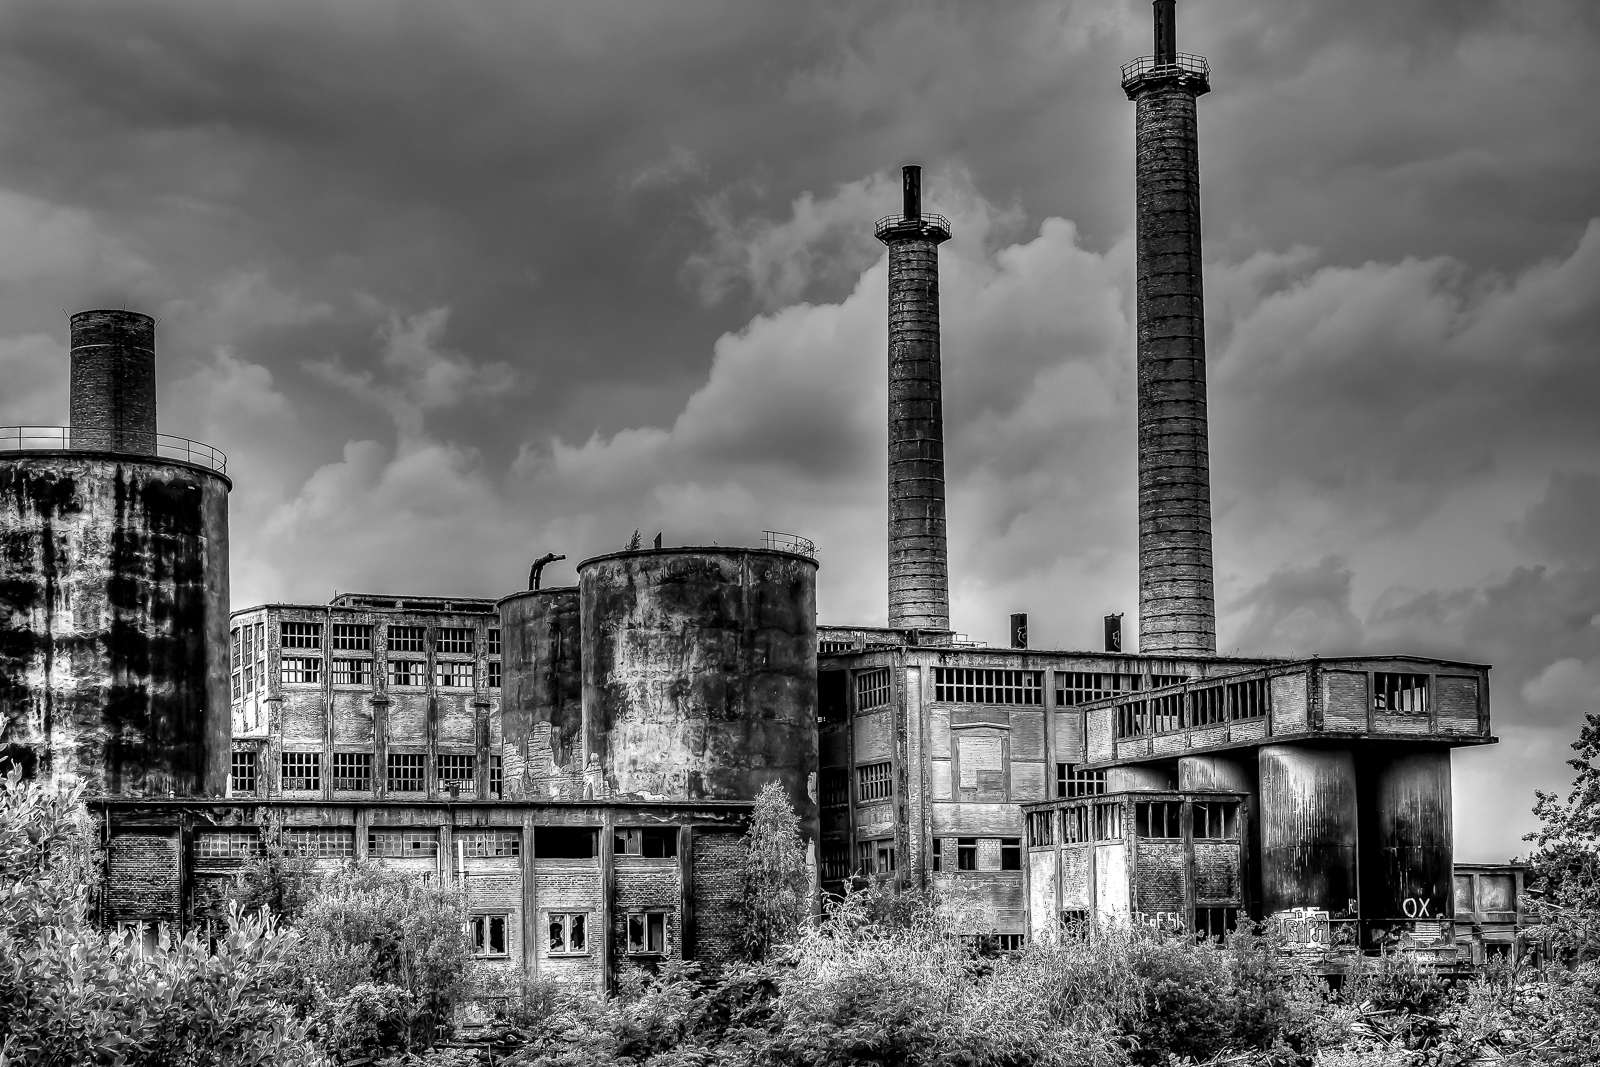 Die alte Chemiefabrik in Rüdersdorf bei Berlin © K.H. Reichert via Flickr.com